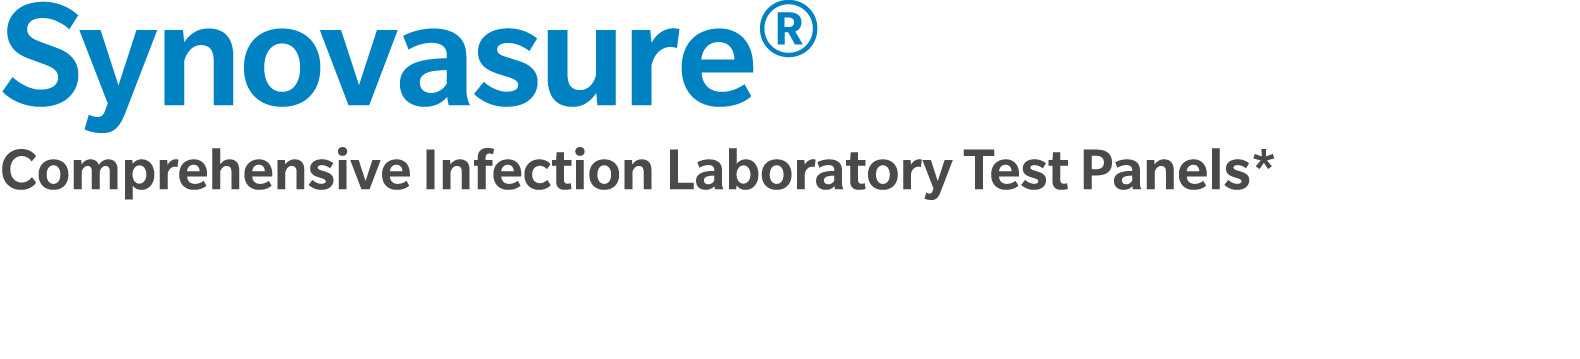 Synovasure® Comprehensive Infection Laboratory Test Panels*